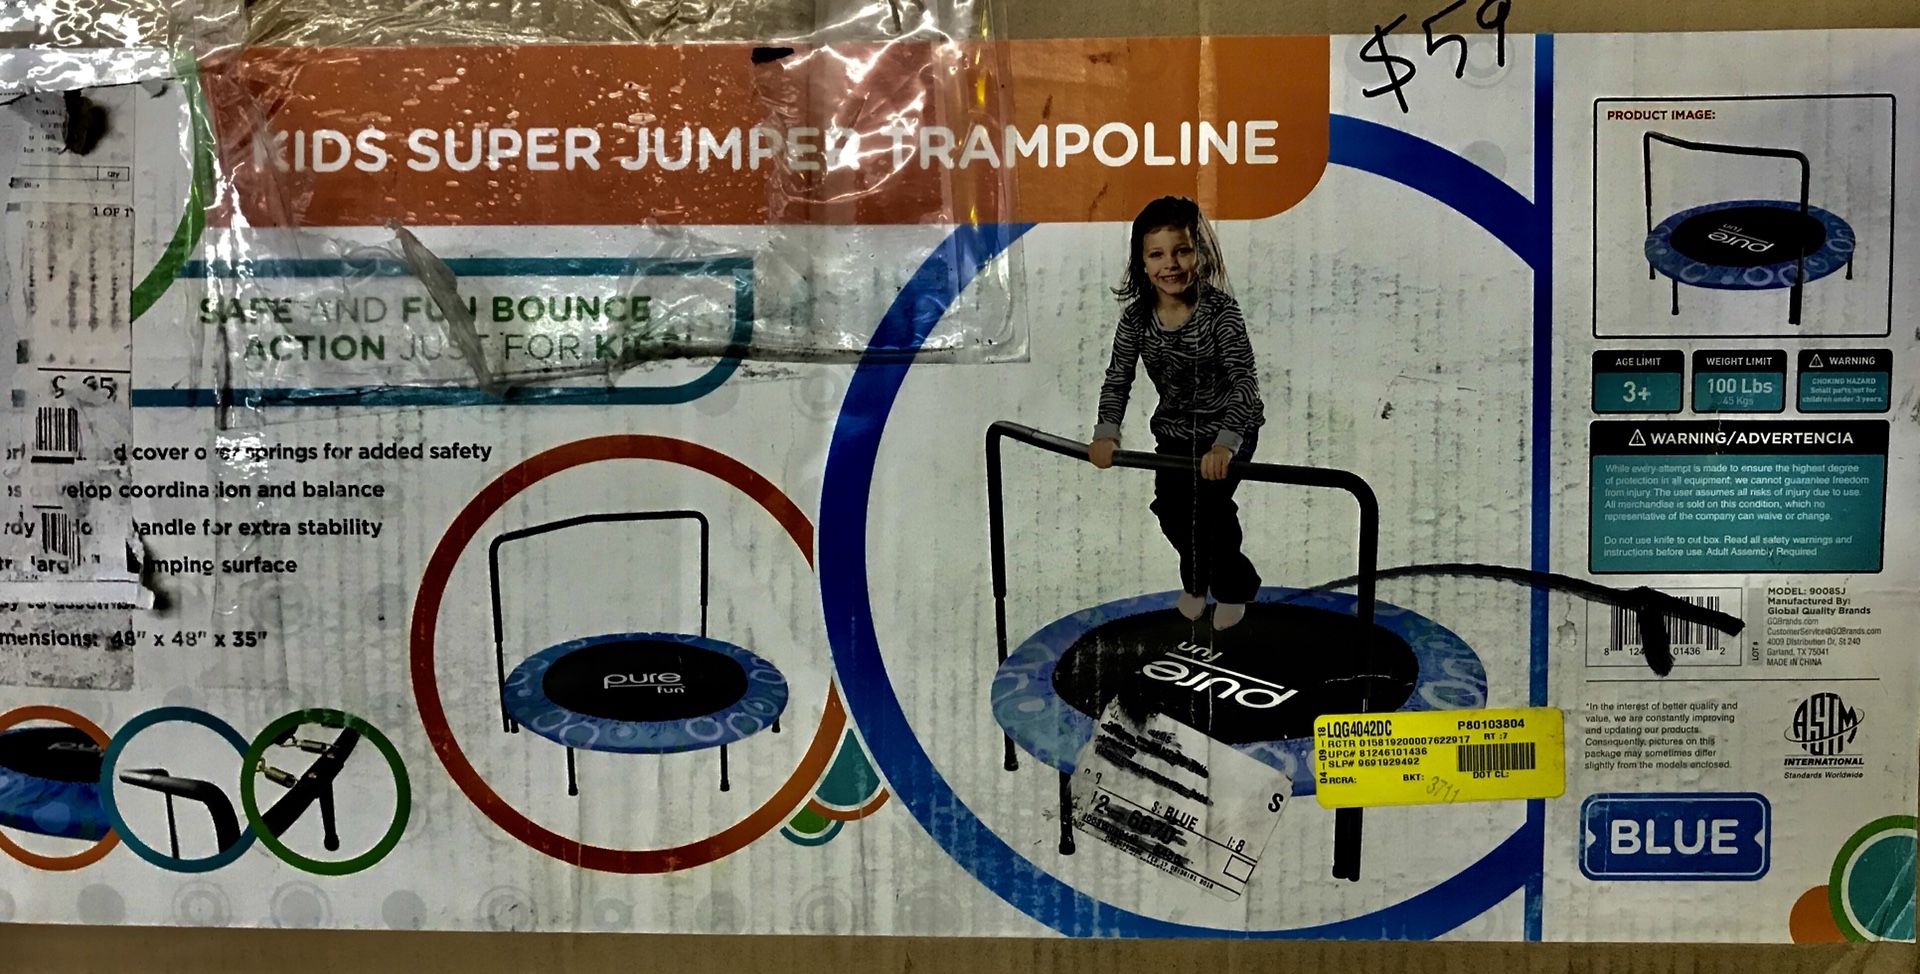 New Kids Super Jumper Trampoline